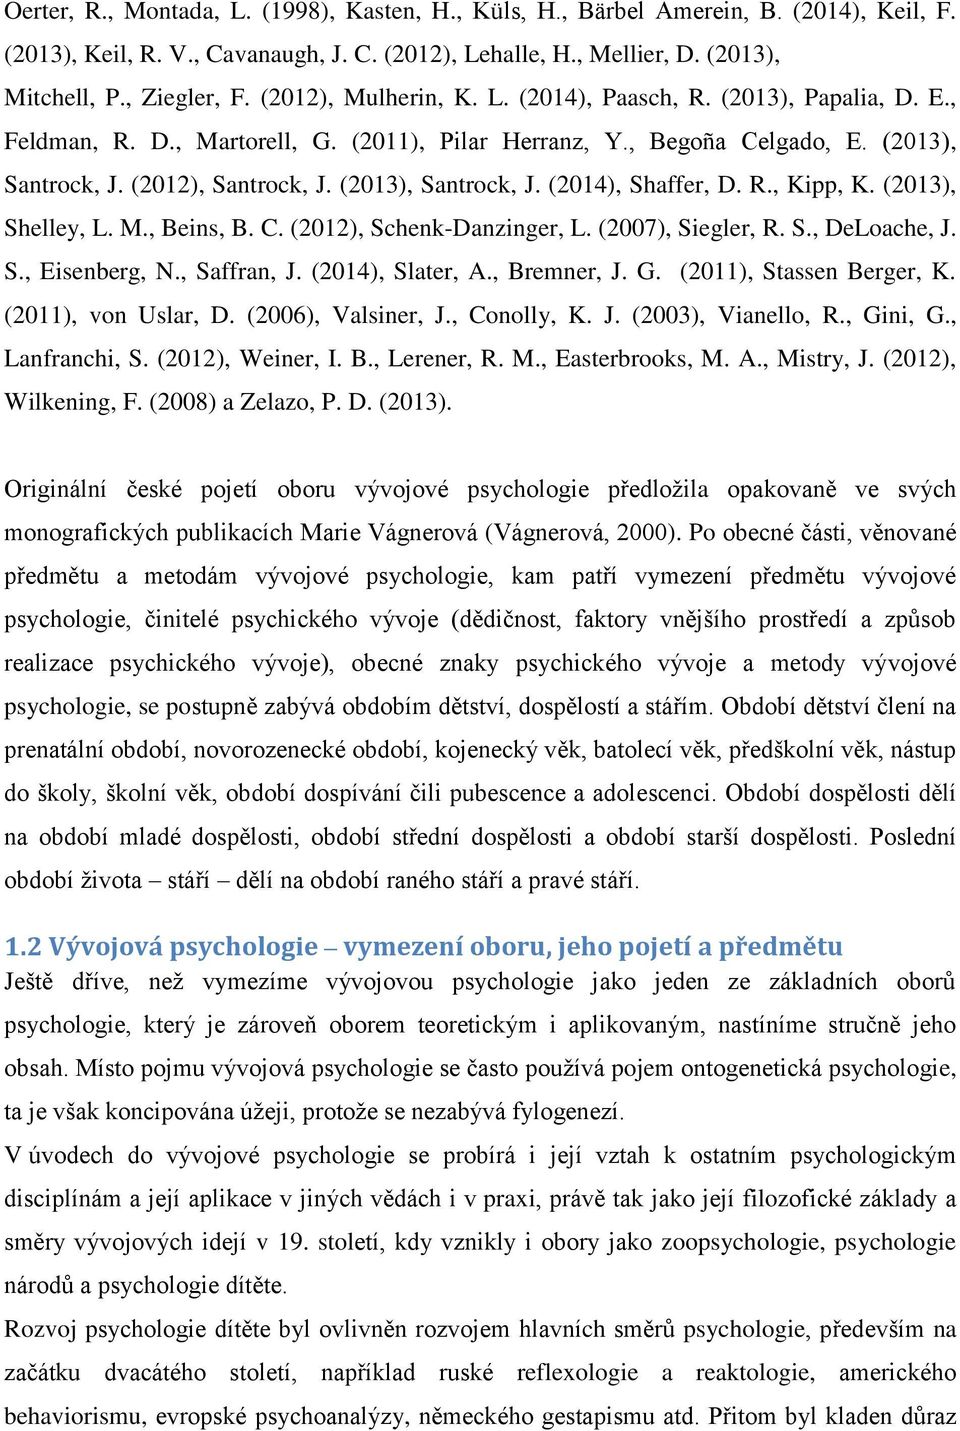 (2013), Santrock, J. (2014), Shaffer, D. R., Kipp, K. (2013), Shelley, L. M., Beins, B. C. (2012), Schenk-Danzinger, L. (2007), Siegler, R. S., DeLoache, J. S., Eisenberg, N., Saffran, J.